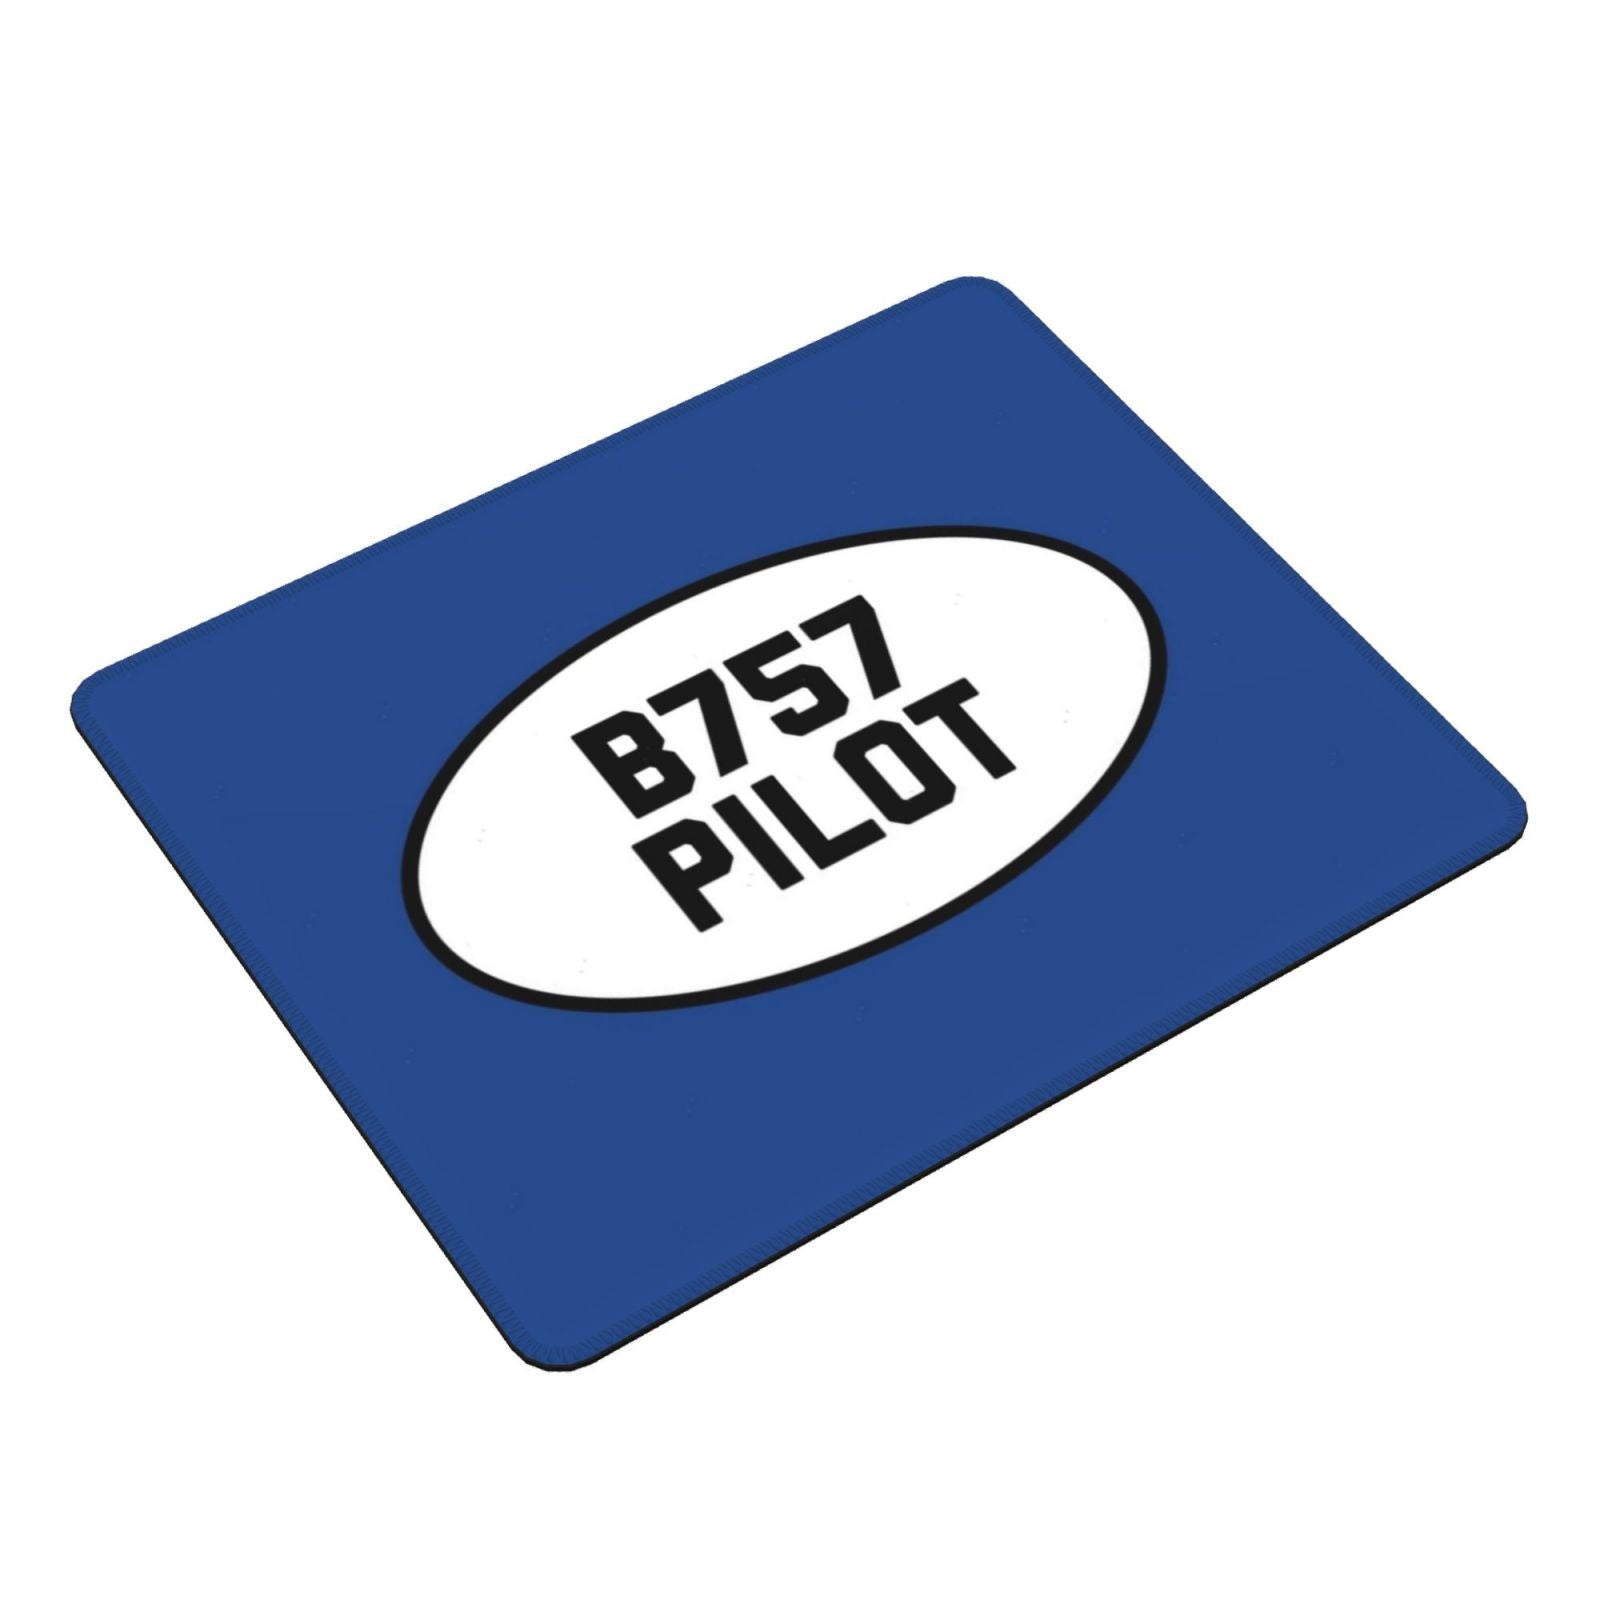 B757 Pilot — Boeing 757 Mouse Pad DIY Print Avgeek Pilot Pilot In Command Student Pilot Aviation General